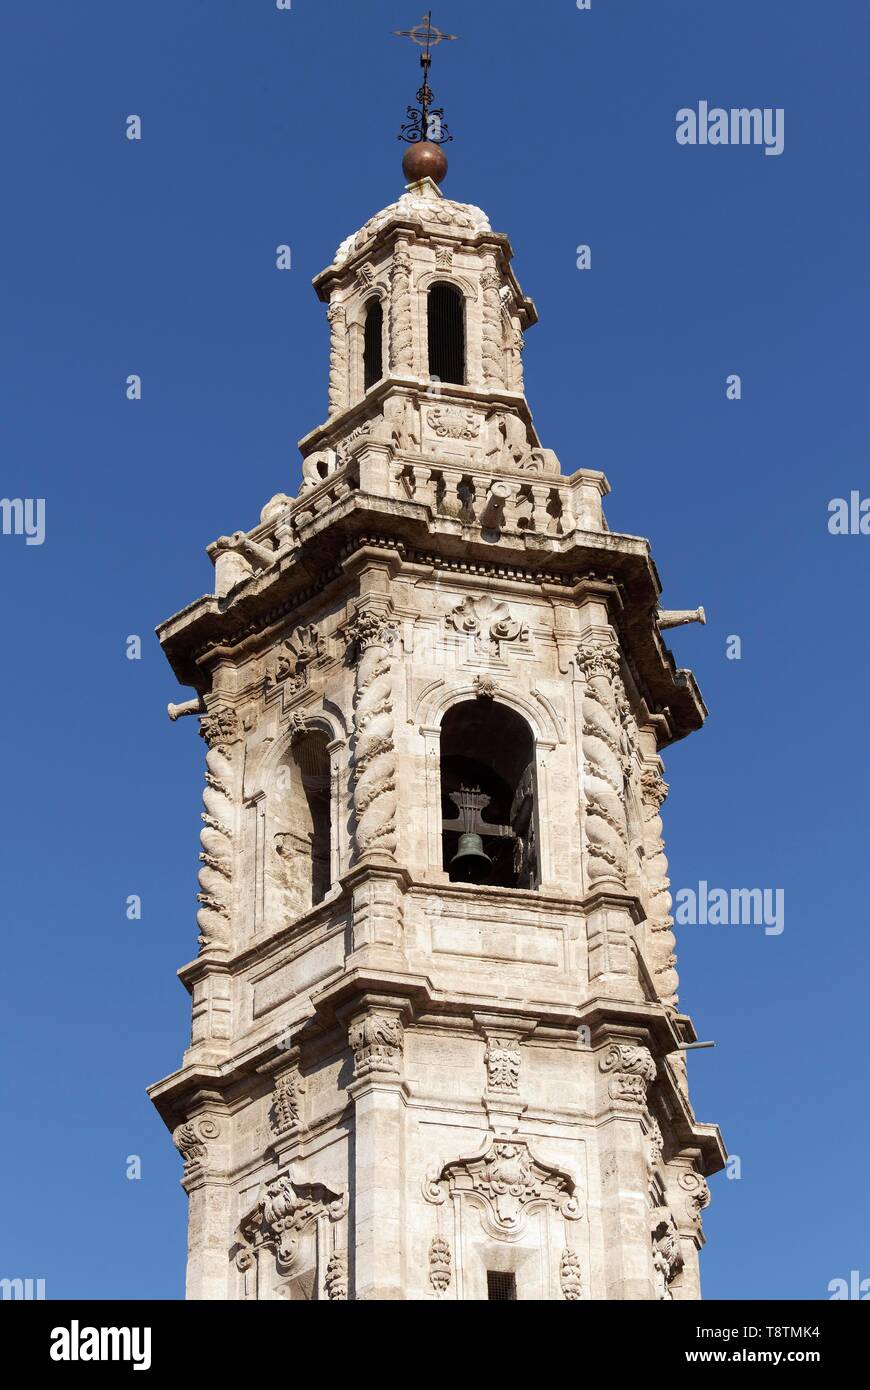 Baroque bell tower of the church Iglesia de Santa Catalina, Ciutat Vella, old town, Valencia, Spain Stock Photo